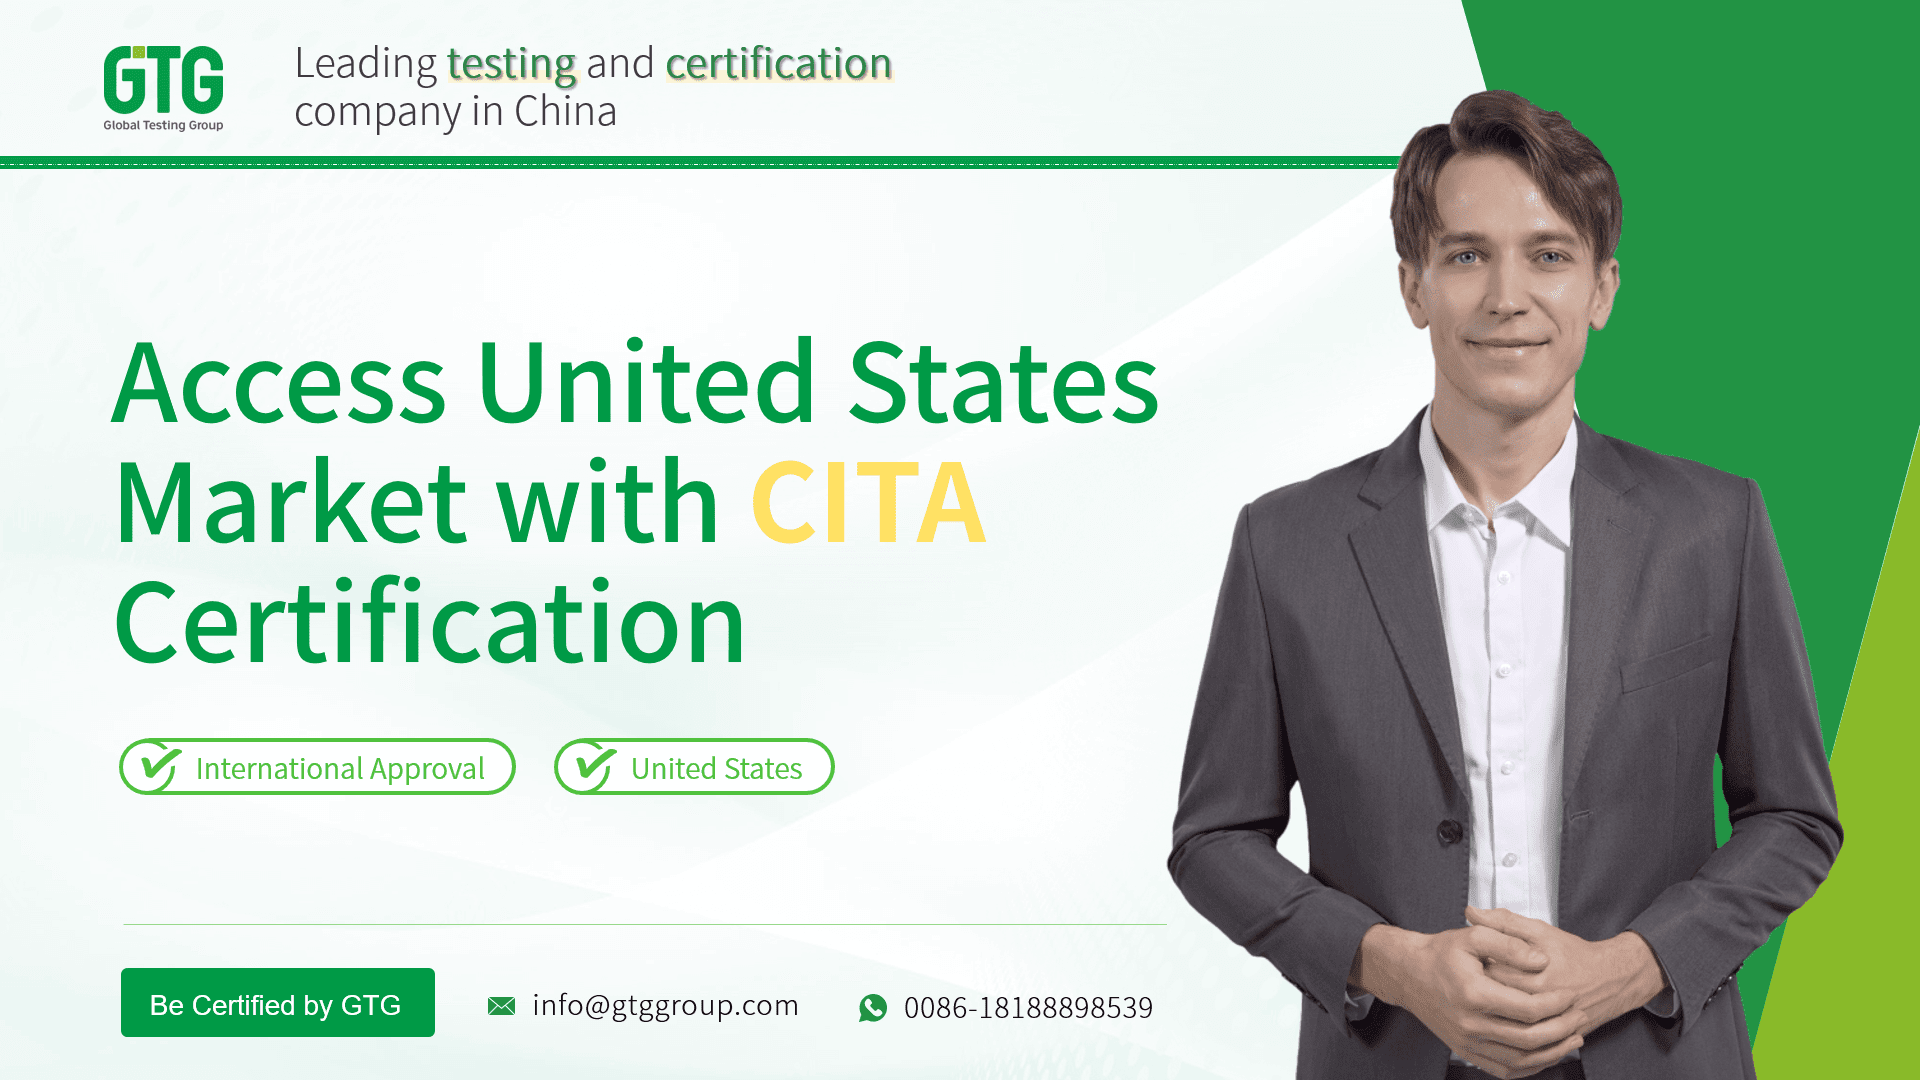 GTG Provides CITA Certification Recognition Service